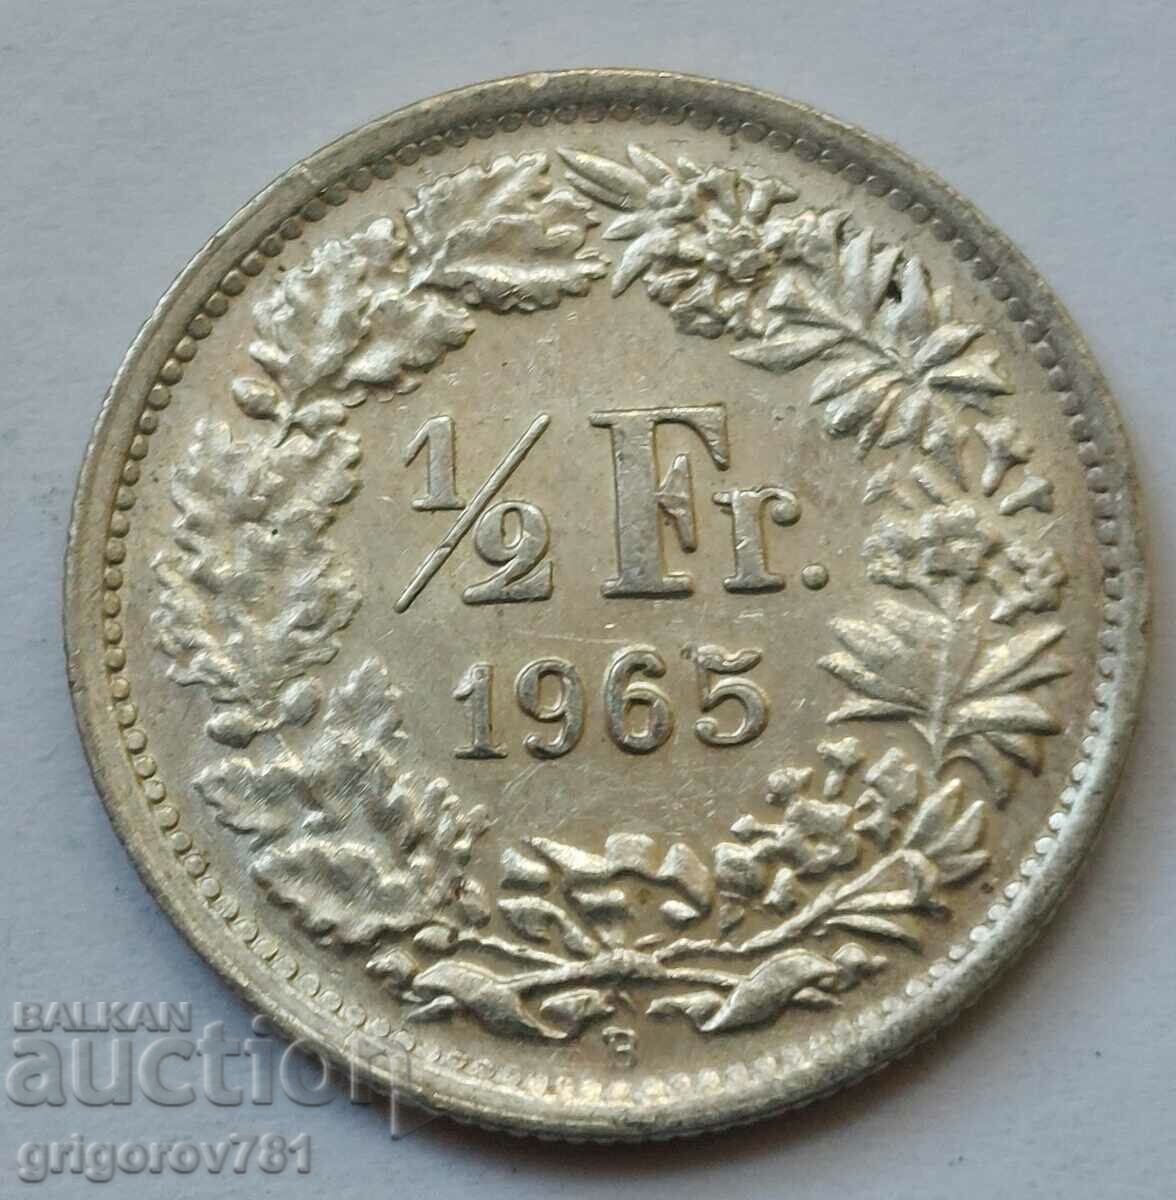 1/2 Franc Silver Switzerland 1965 B - Silver Coin #191